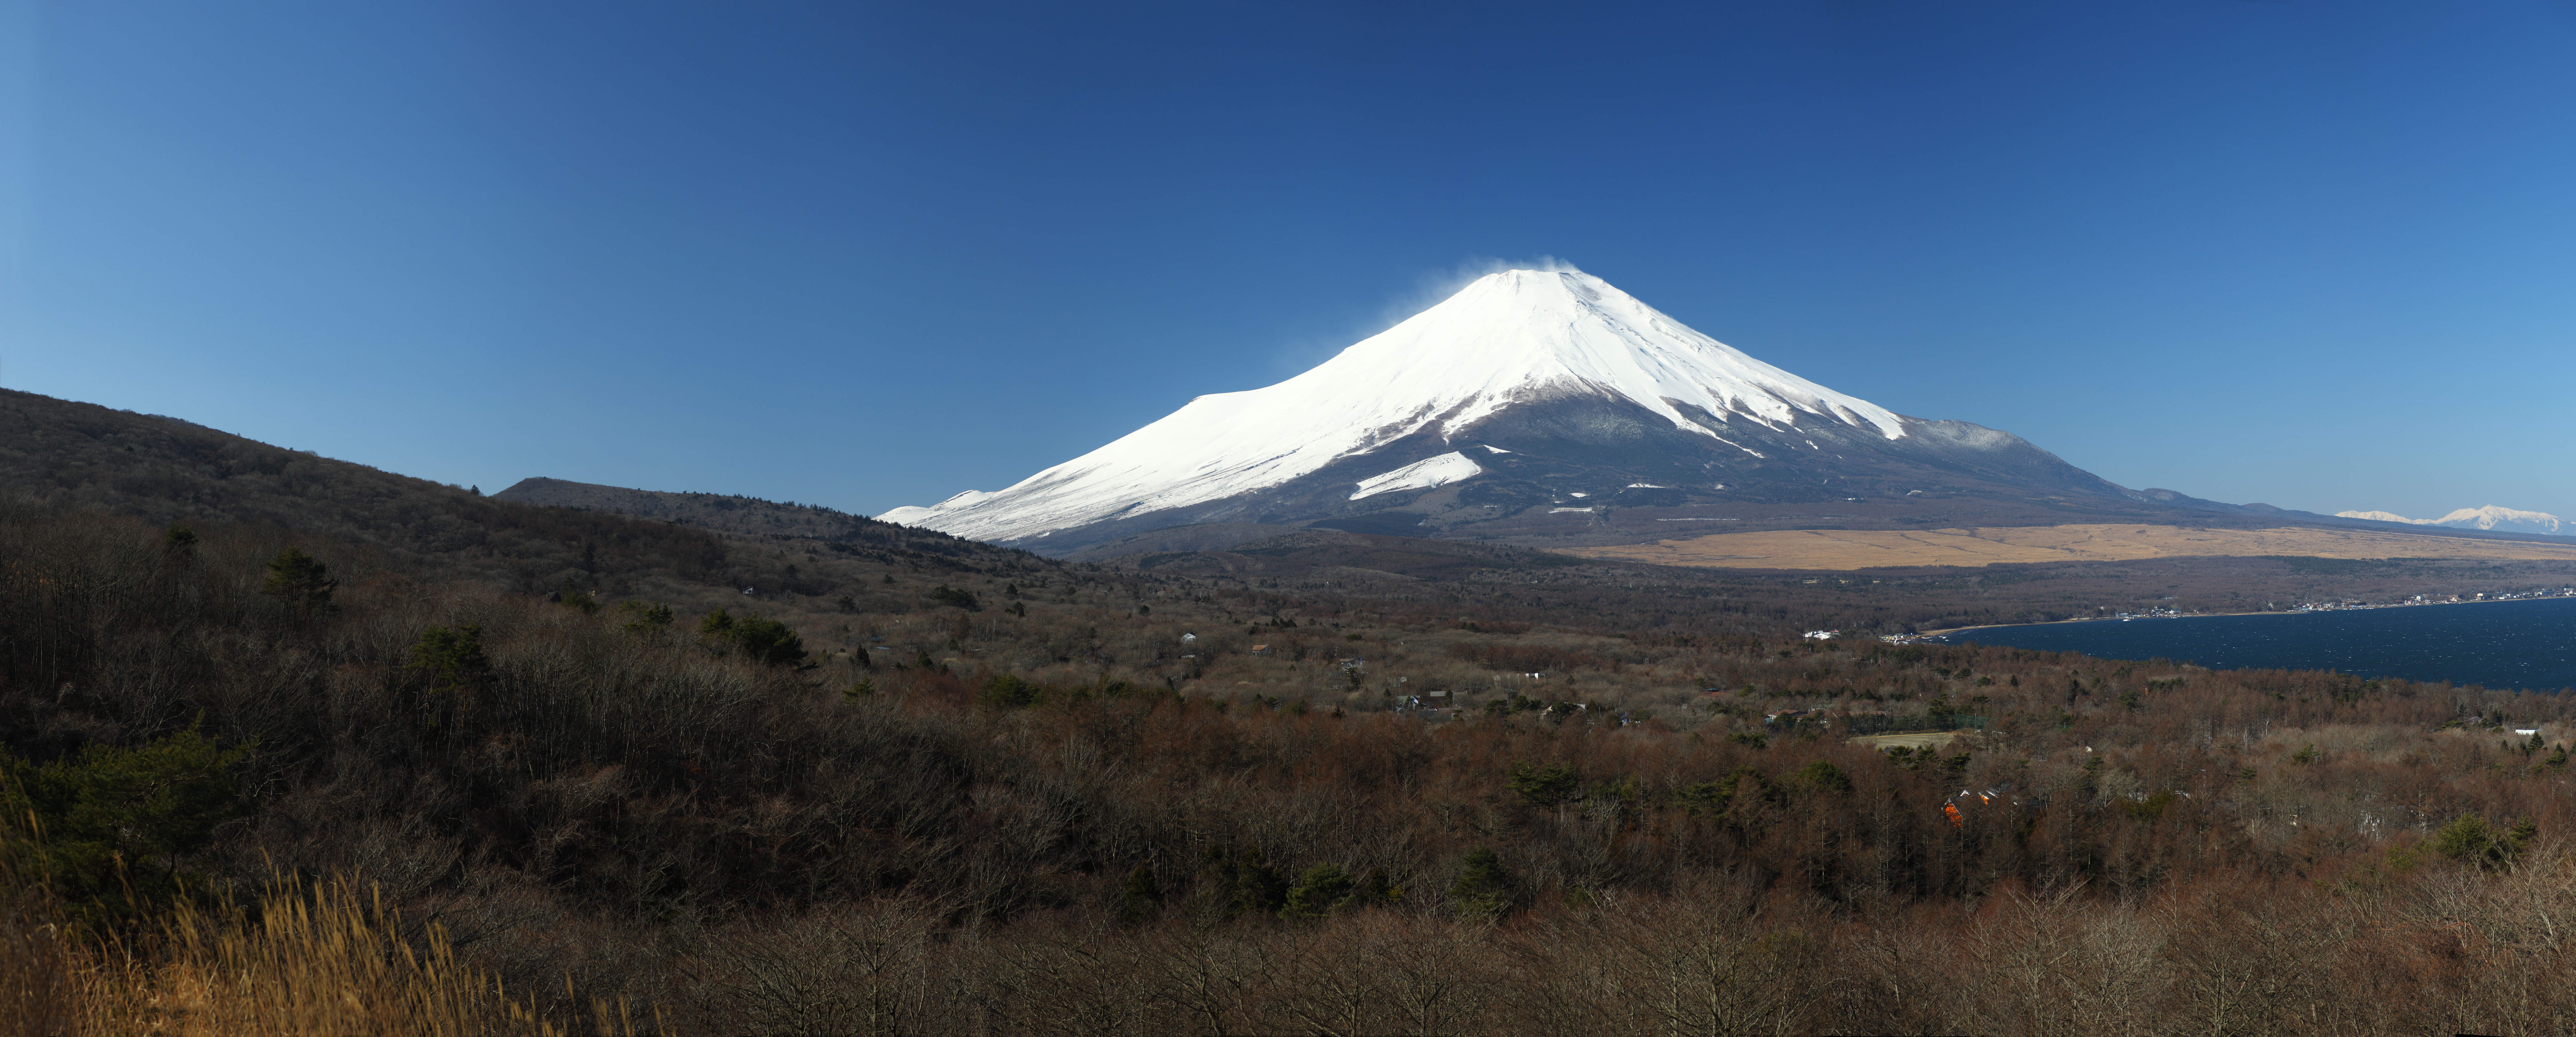 photo,material,free,landscape,picture,stock photo,Creative Commons,Mt. Fuji, Mt. Fuji, Yamanakako, , 